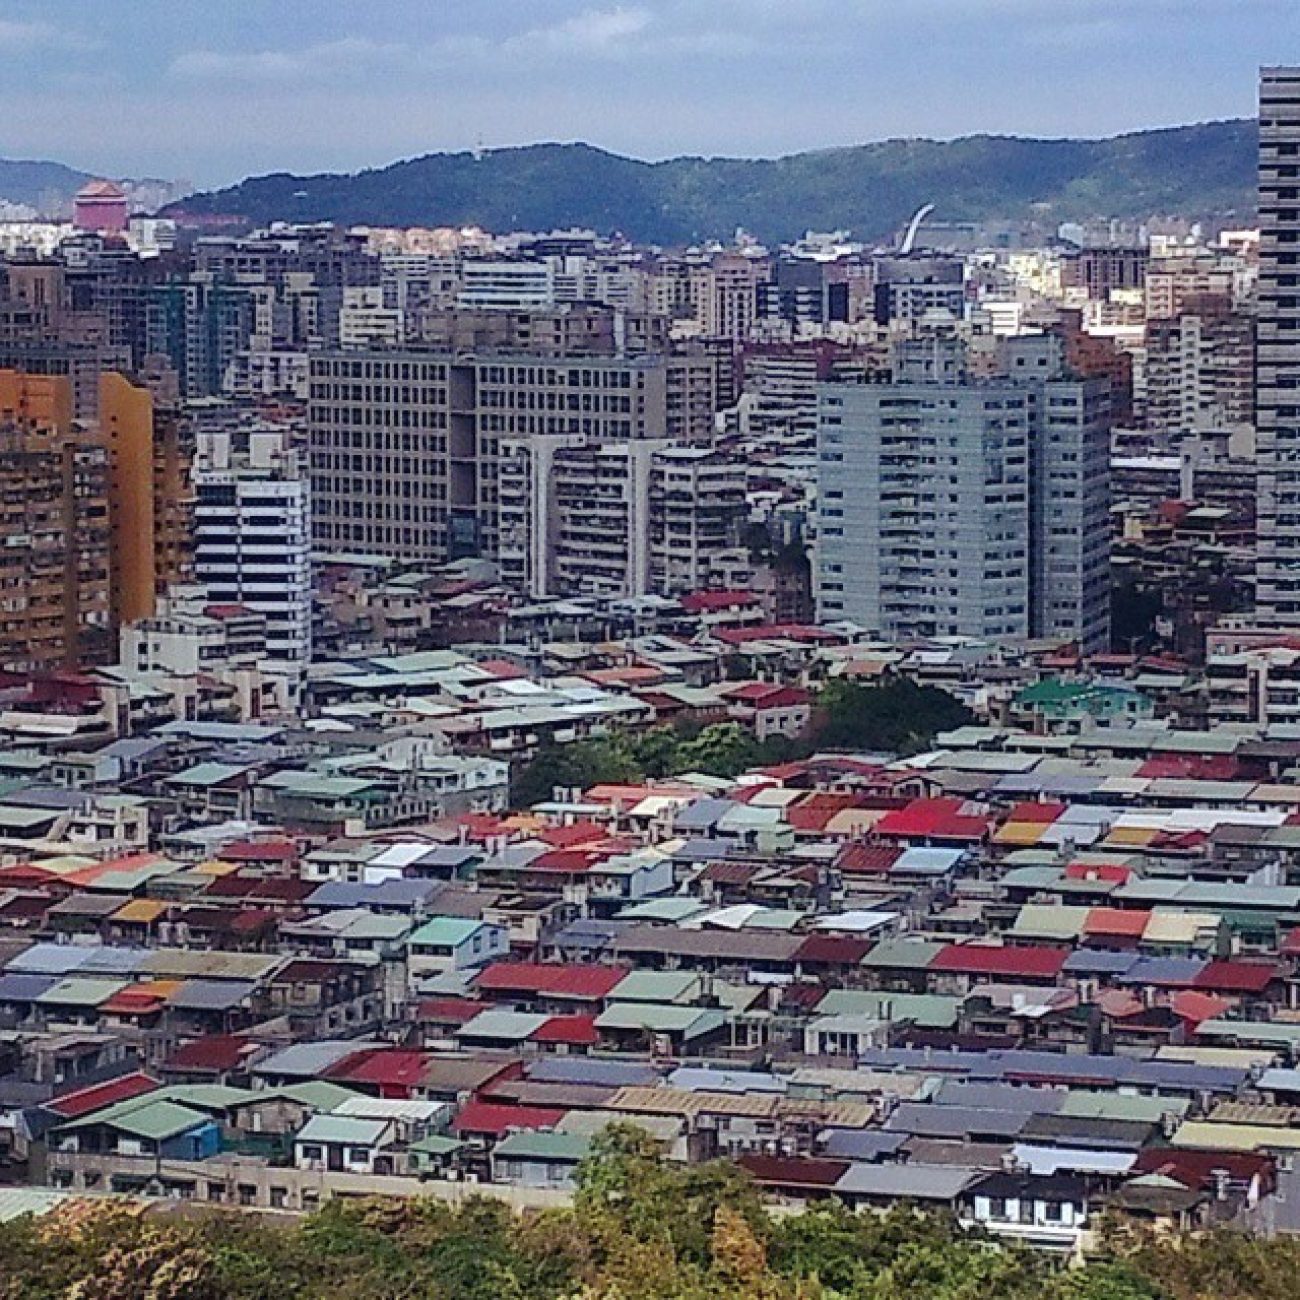 Taipei. Home of the corrugated metal roof.